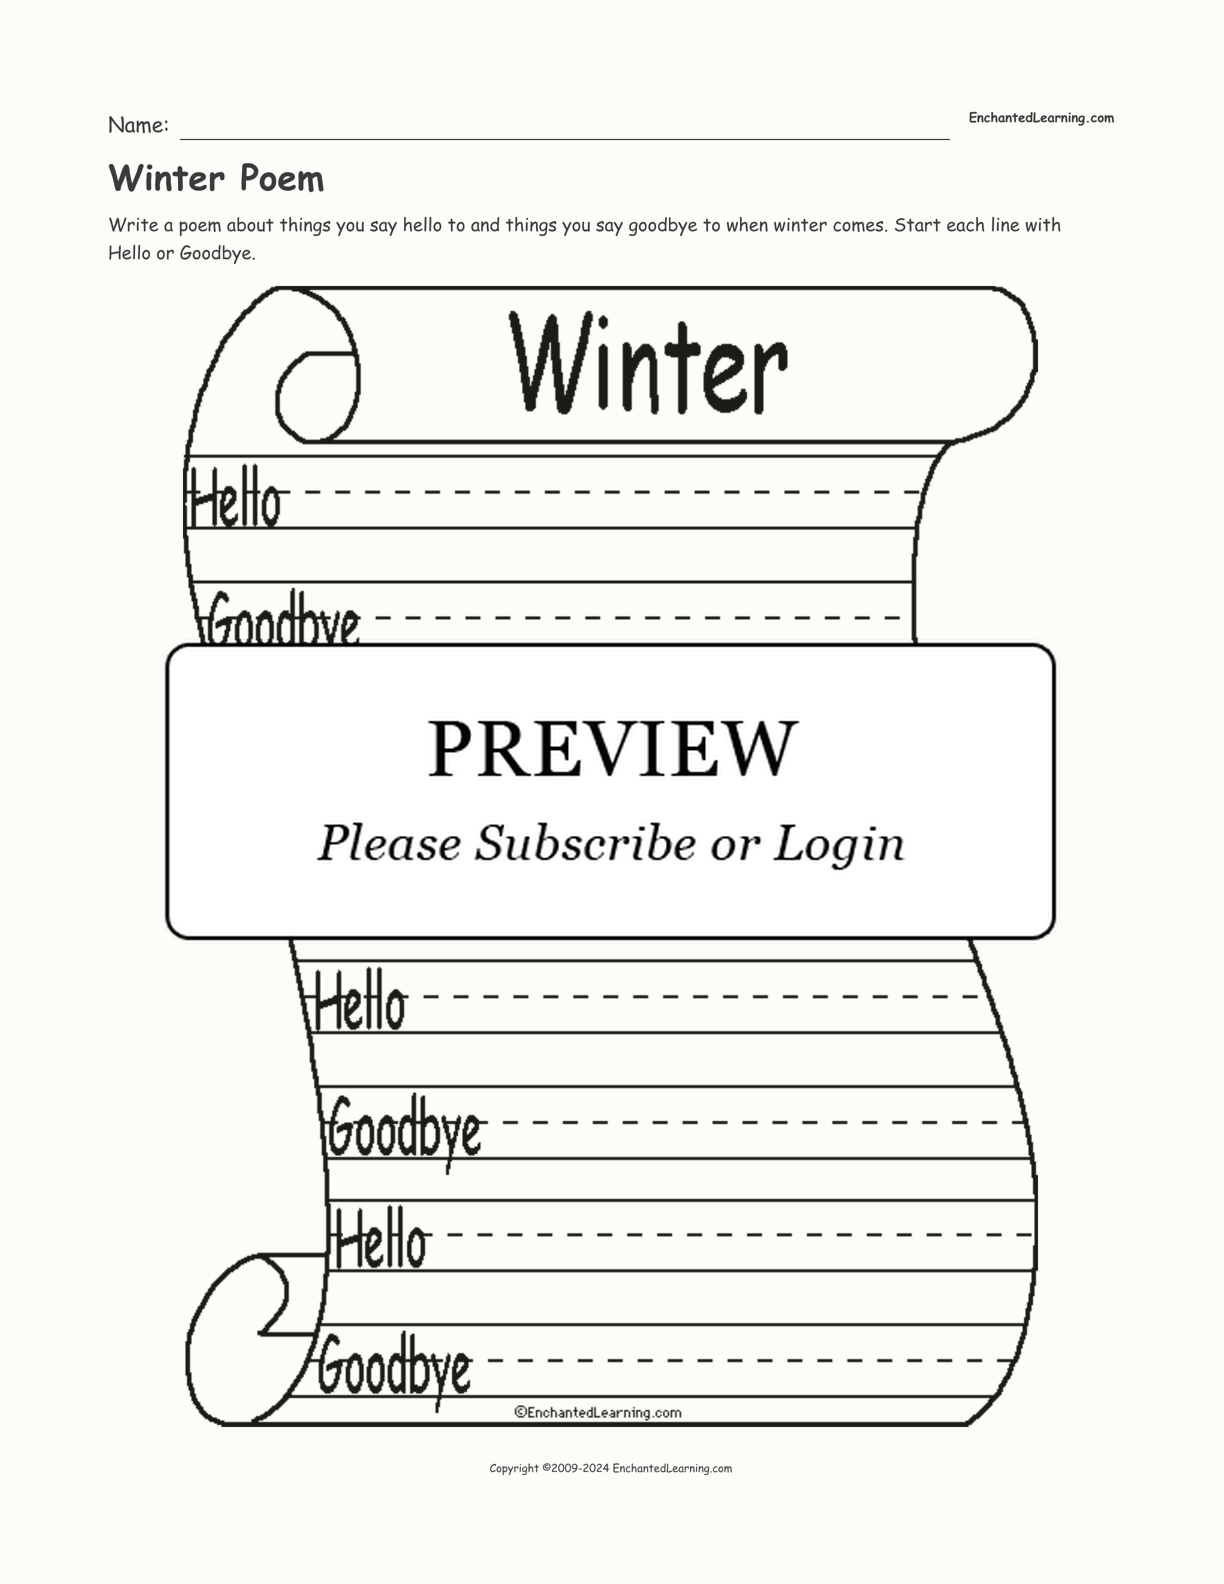 Winter Poem interactive worksheet page 1